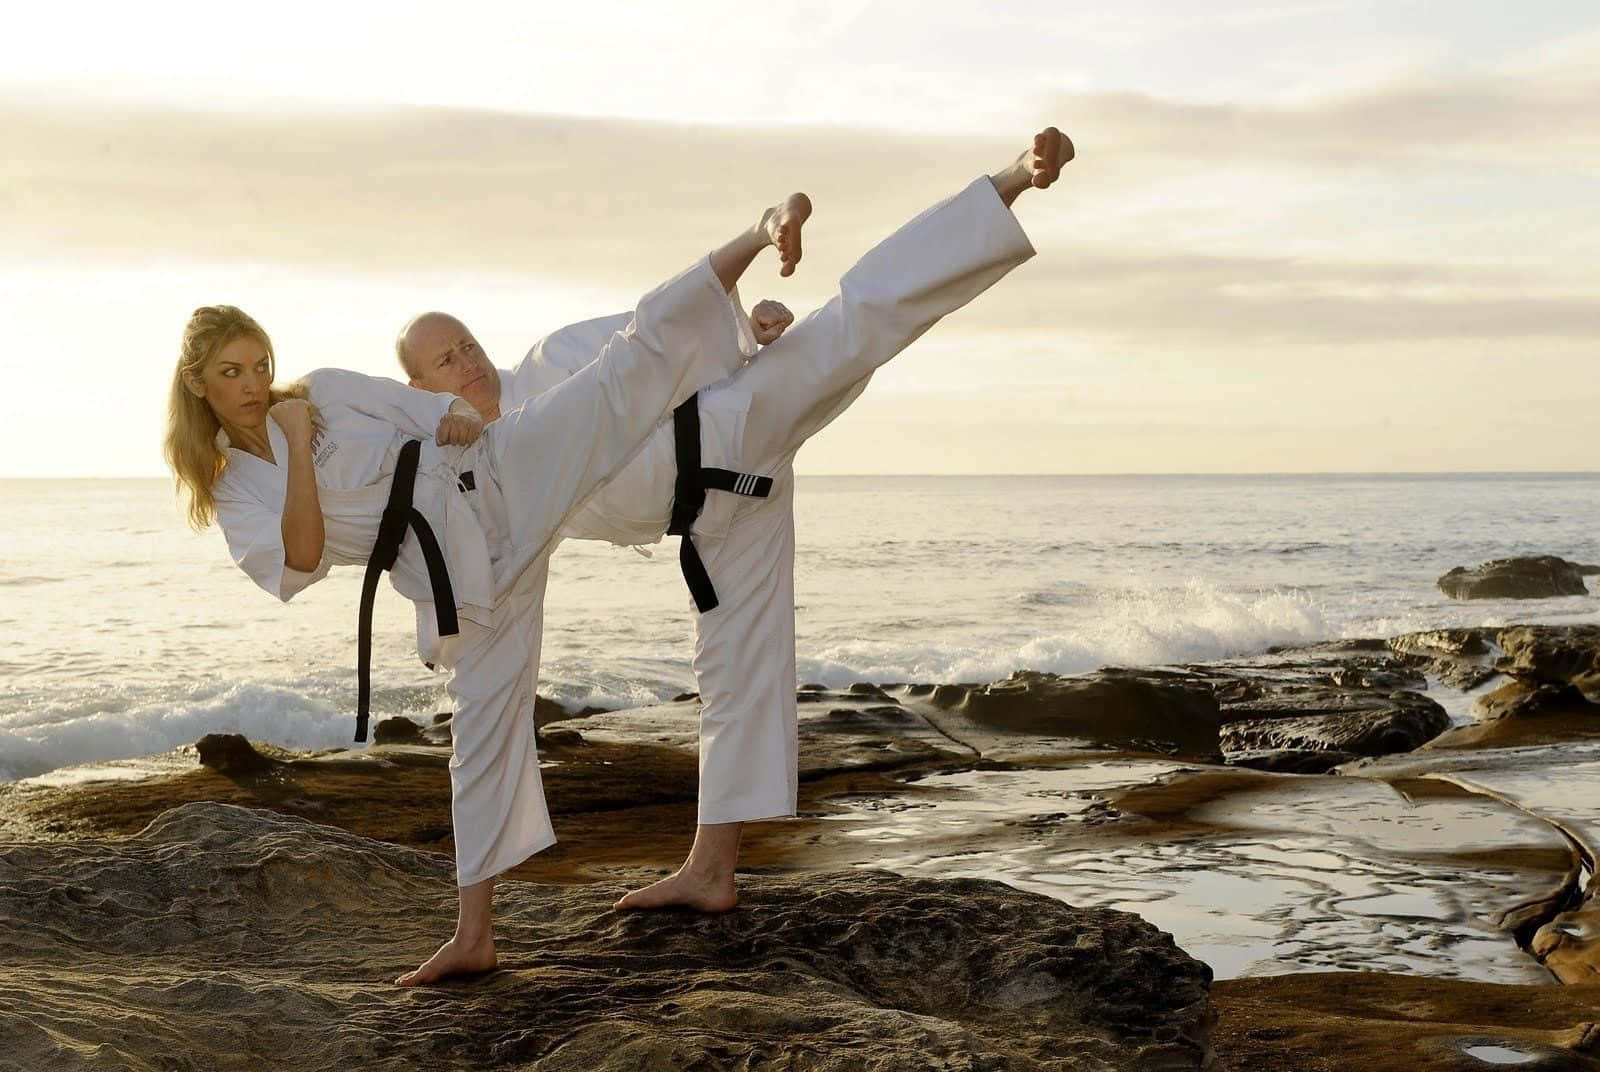 Two People Doing Karate On Rocks